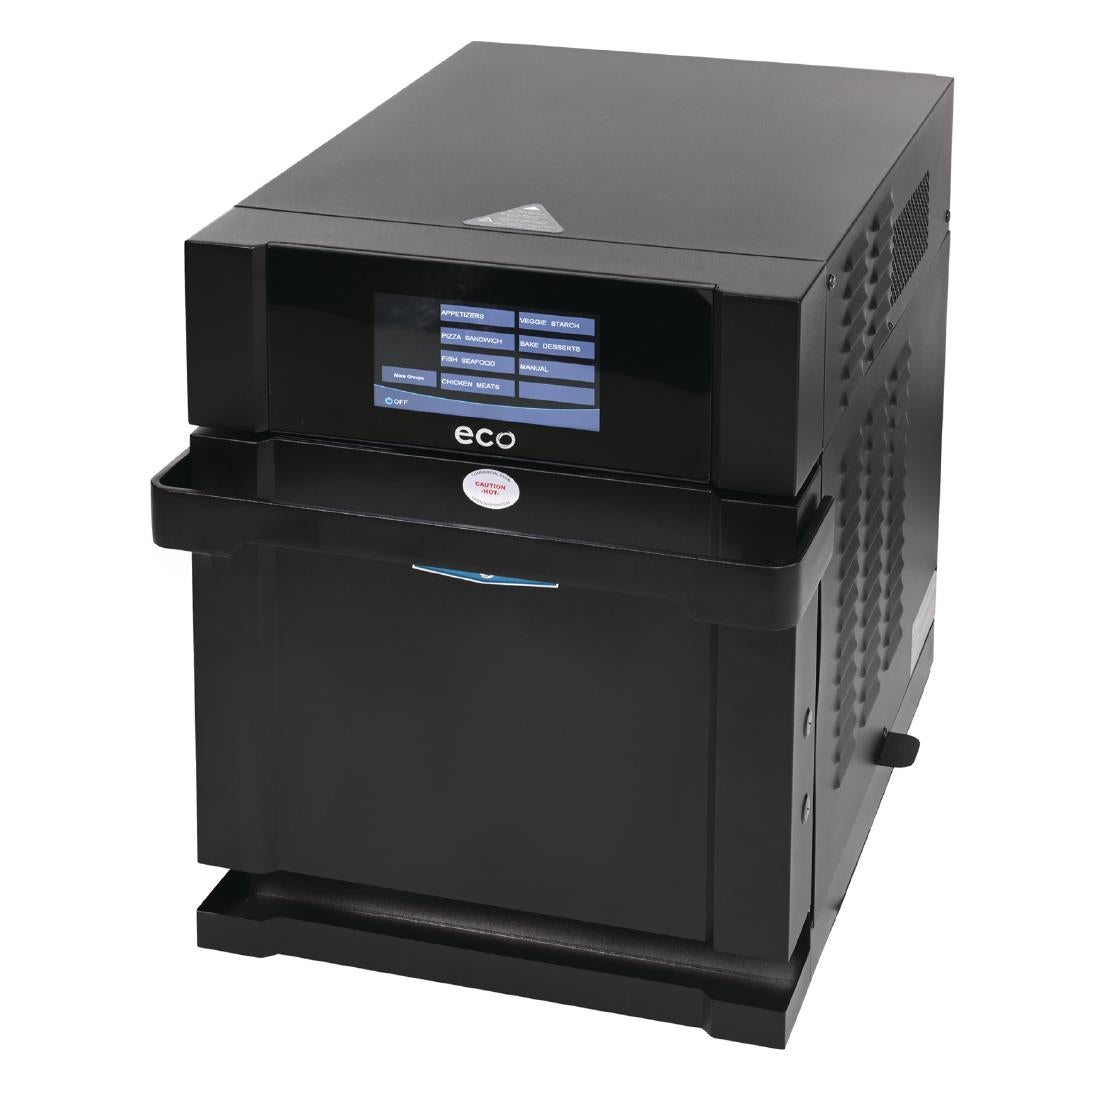 DG036 Turbochef Eco Rapid Cook Oven Black JD Catering Equipment Solutions Ltd